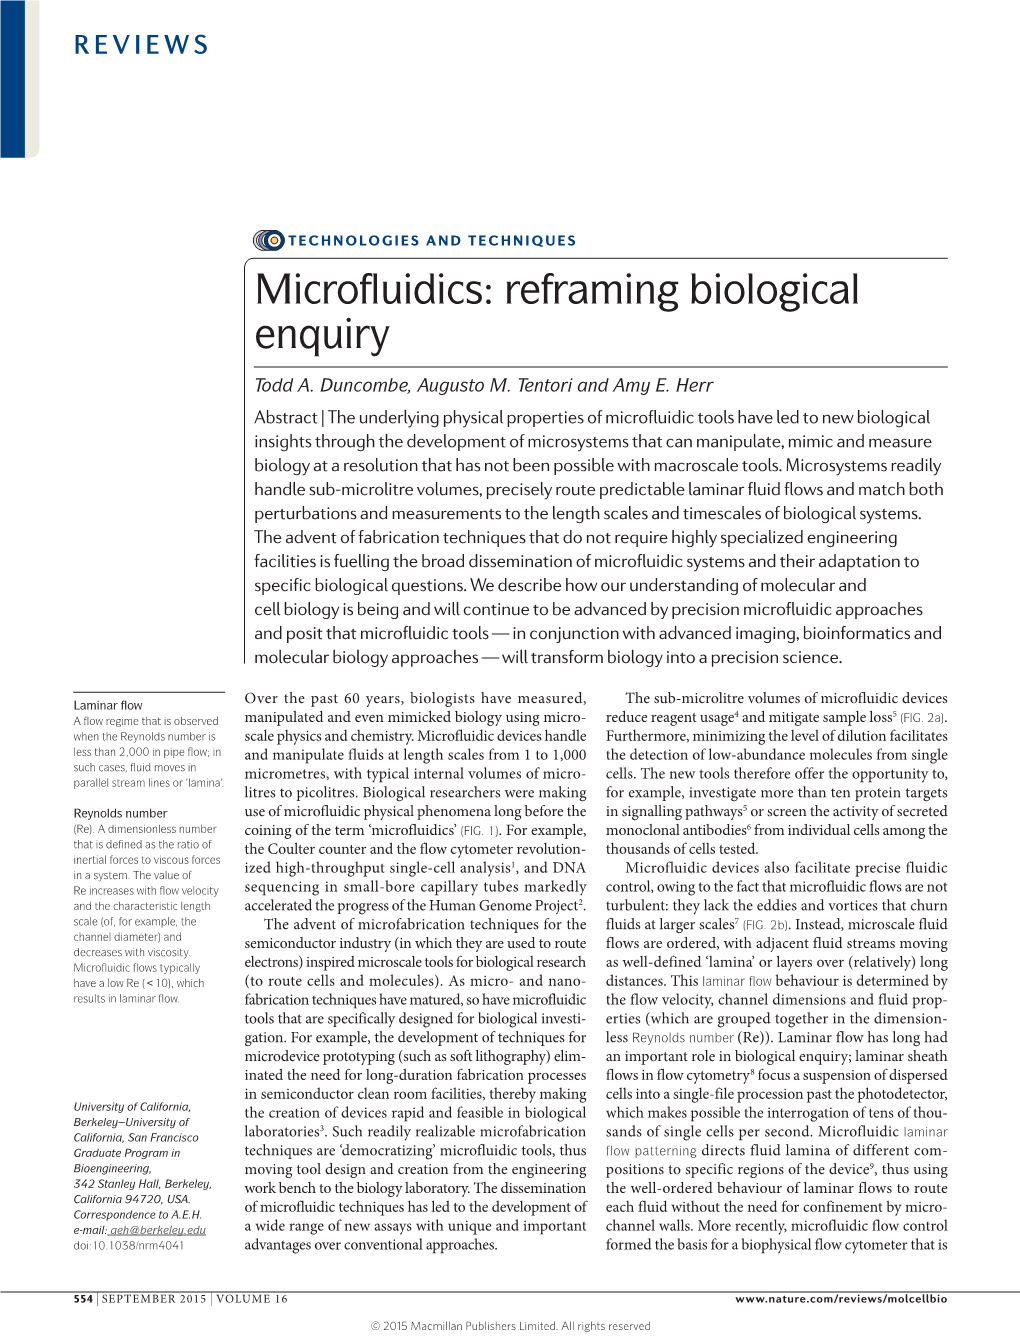 Microfluidics: Reframing Biological Enquiry